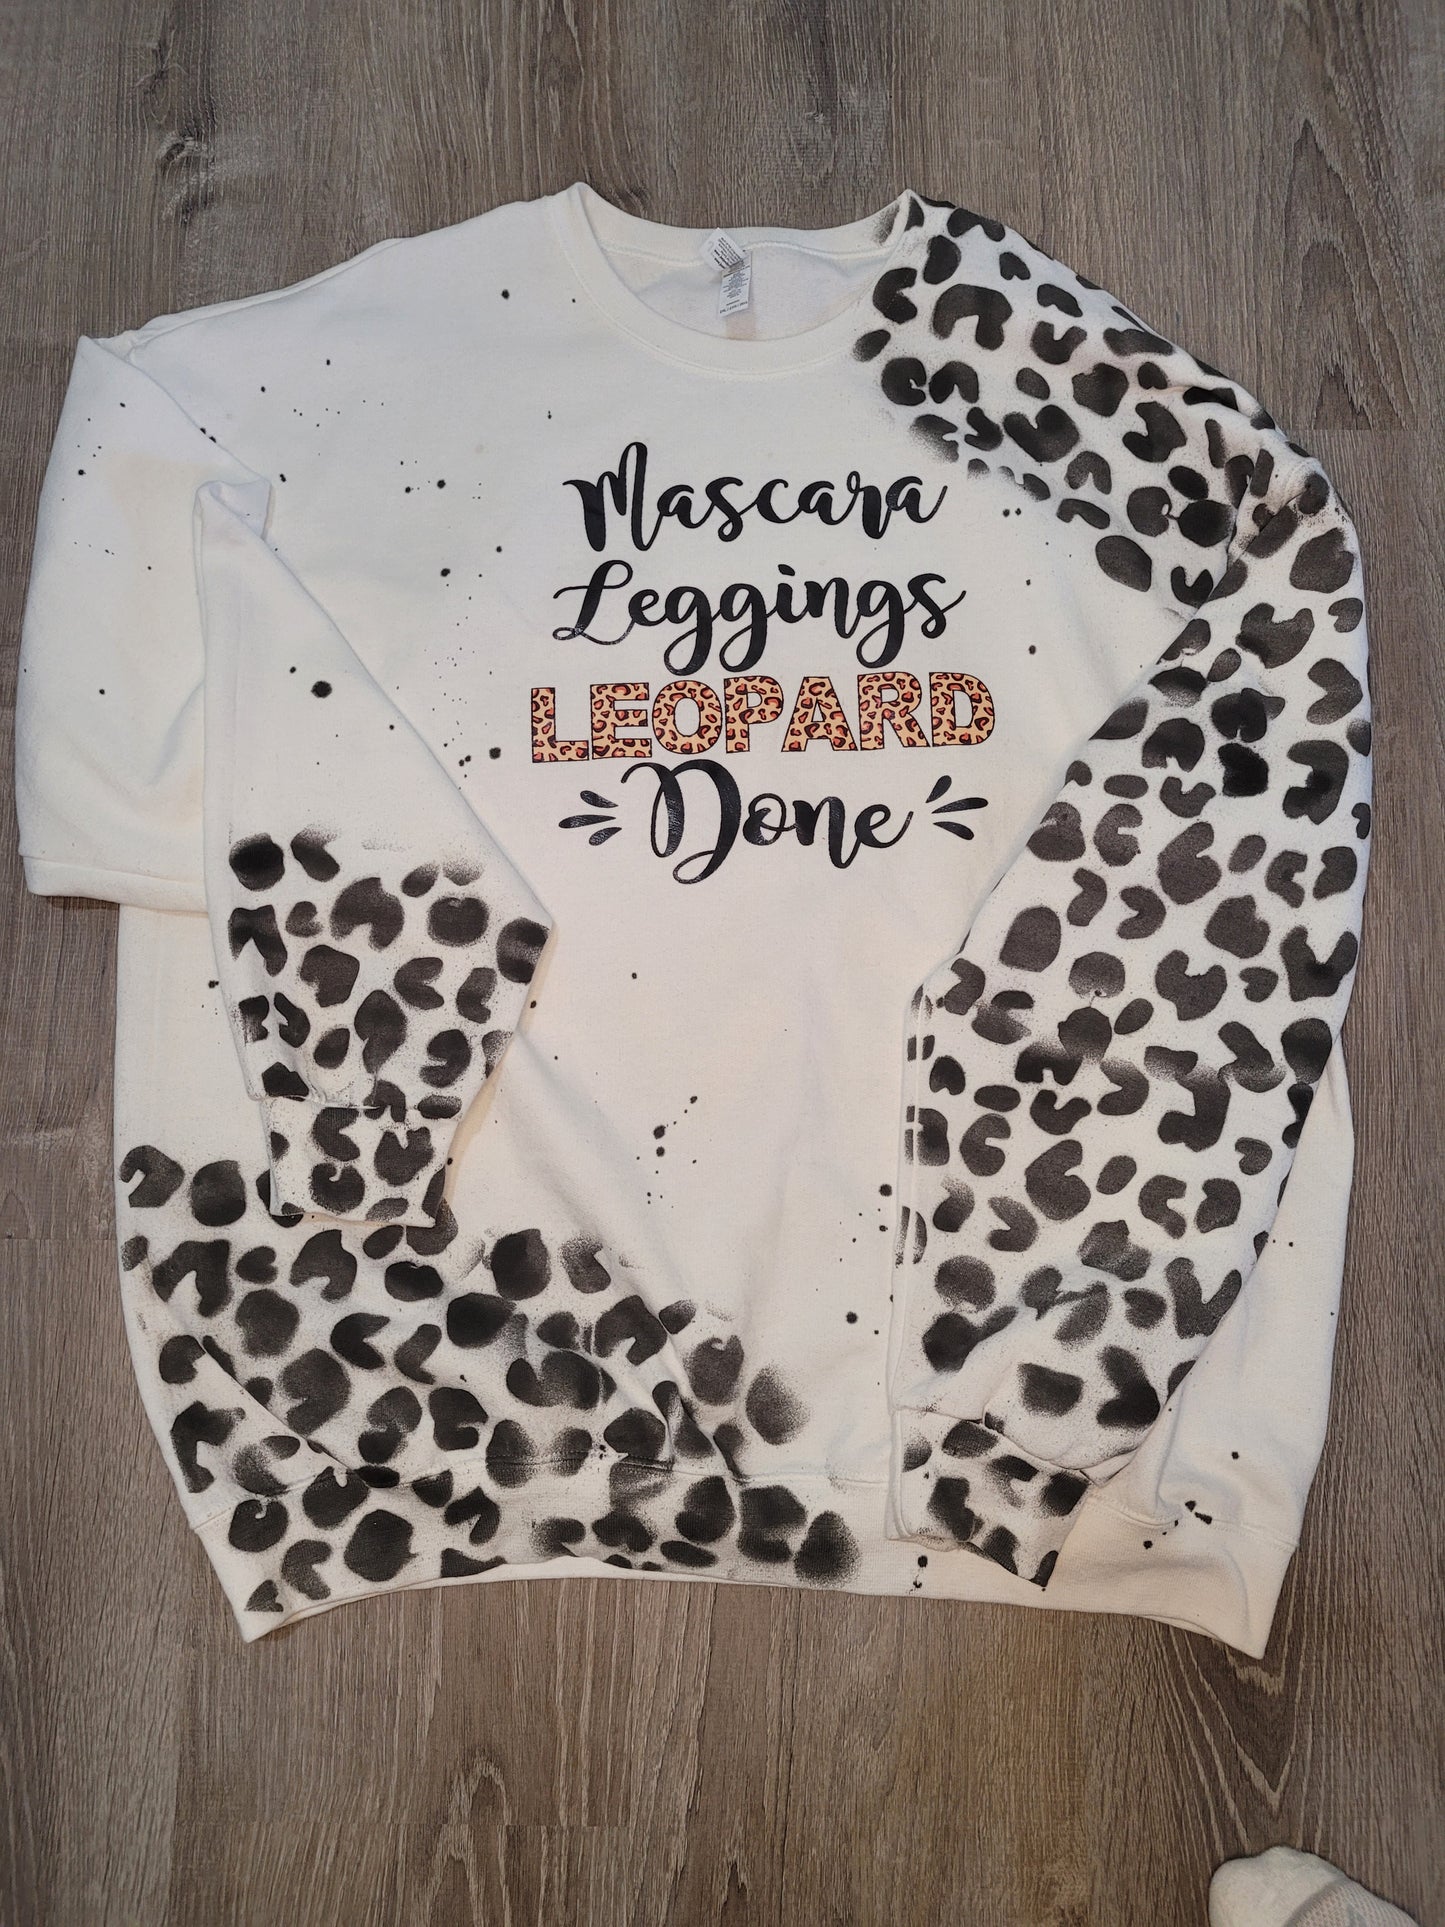 Mascara Legging Leopard Done Women's Sweatshirt